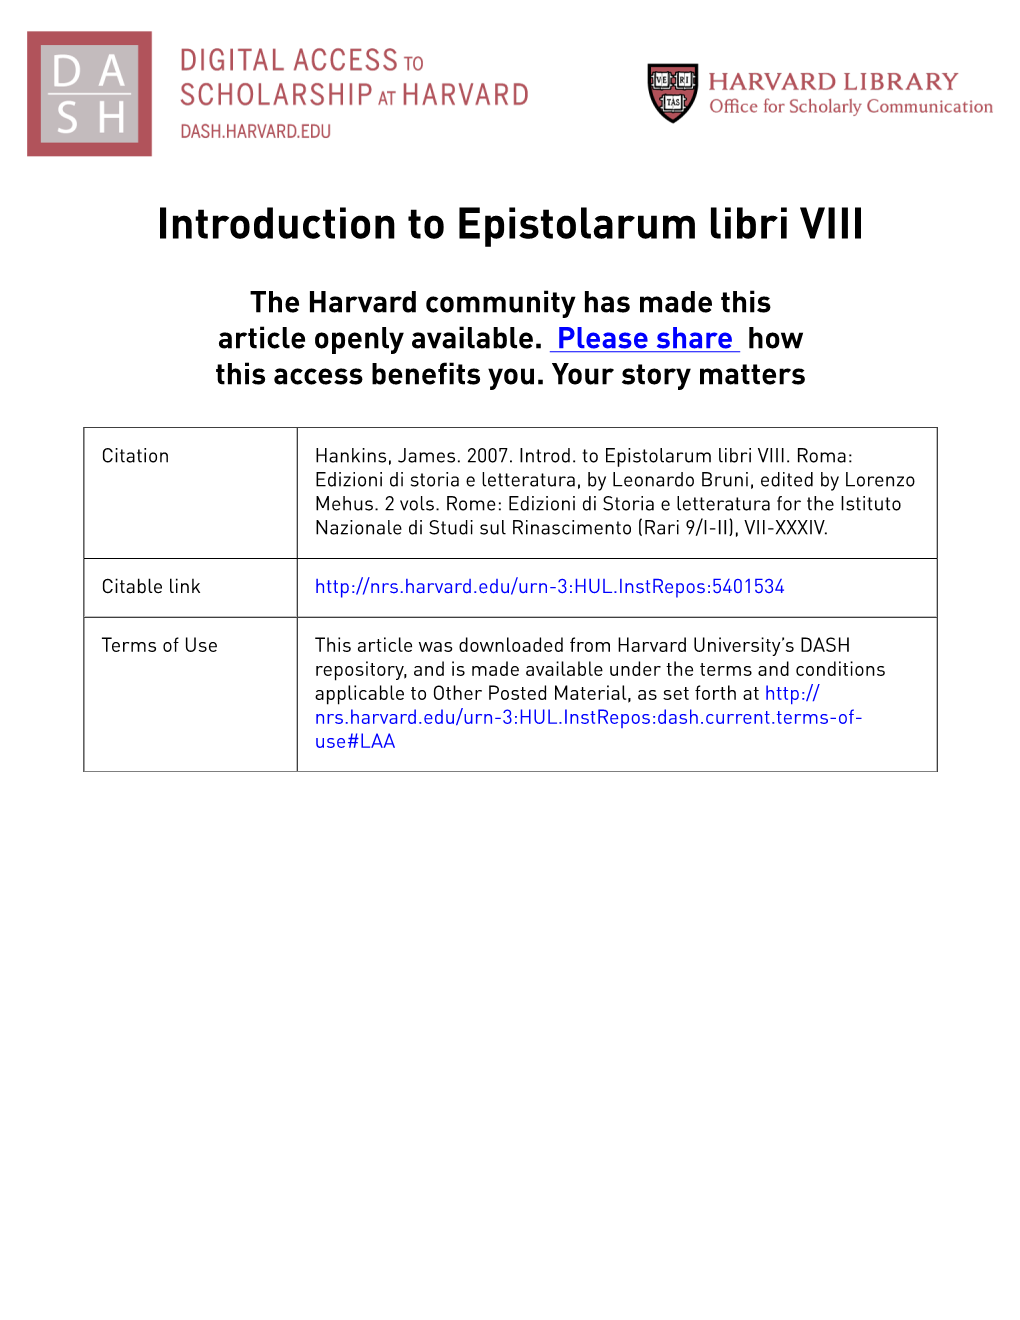 Introduction to Epistolarum Libri VIII